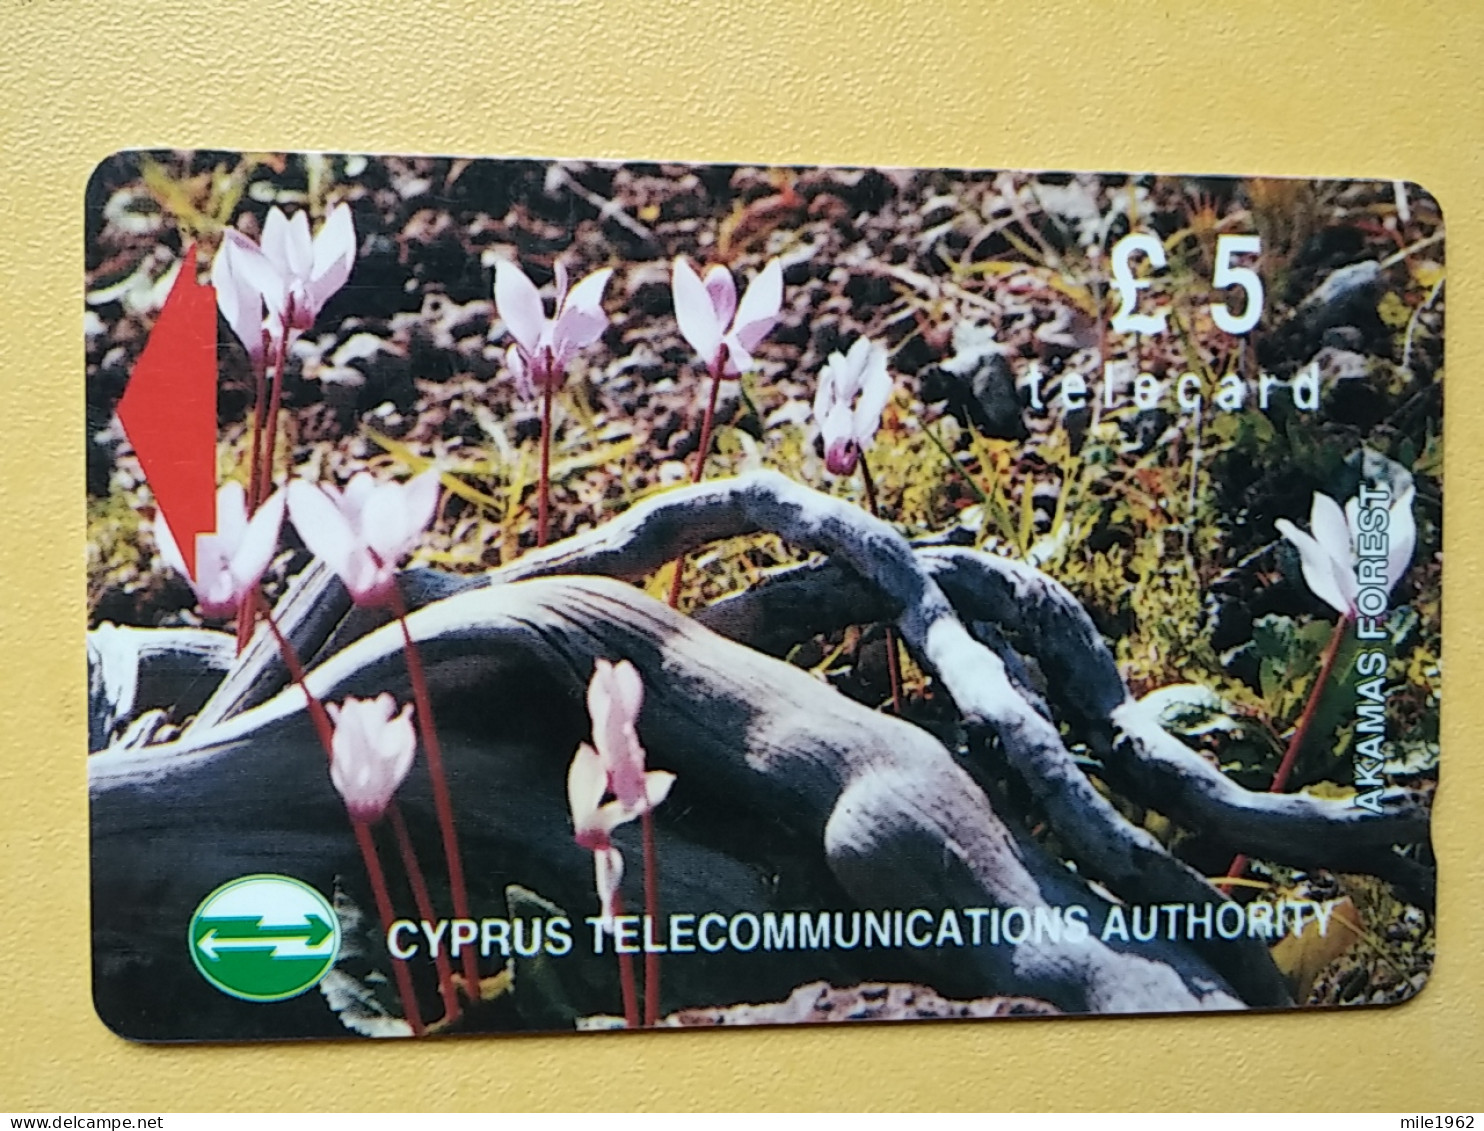 T-277 - CYPRUS TELECARD, PHONECARD, FLOWER, FLEUR,  - Cyprus